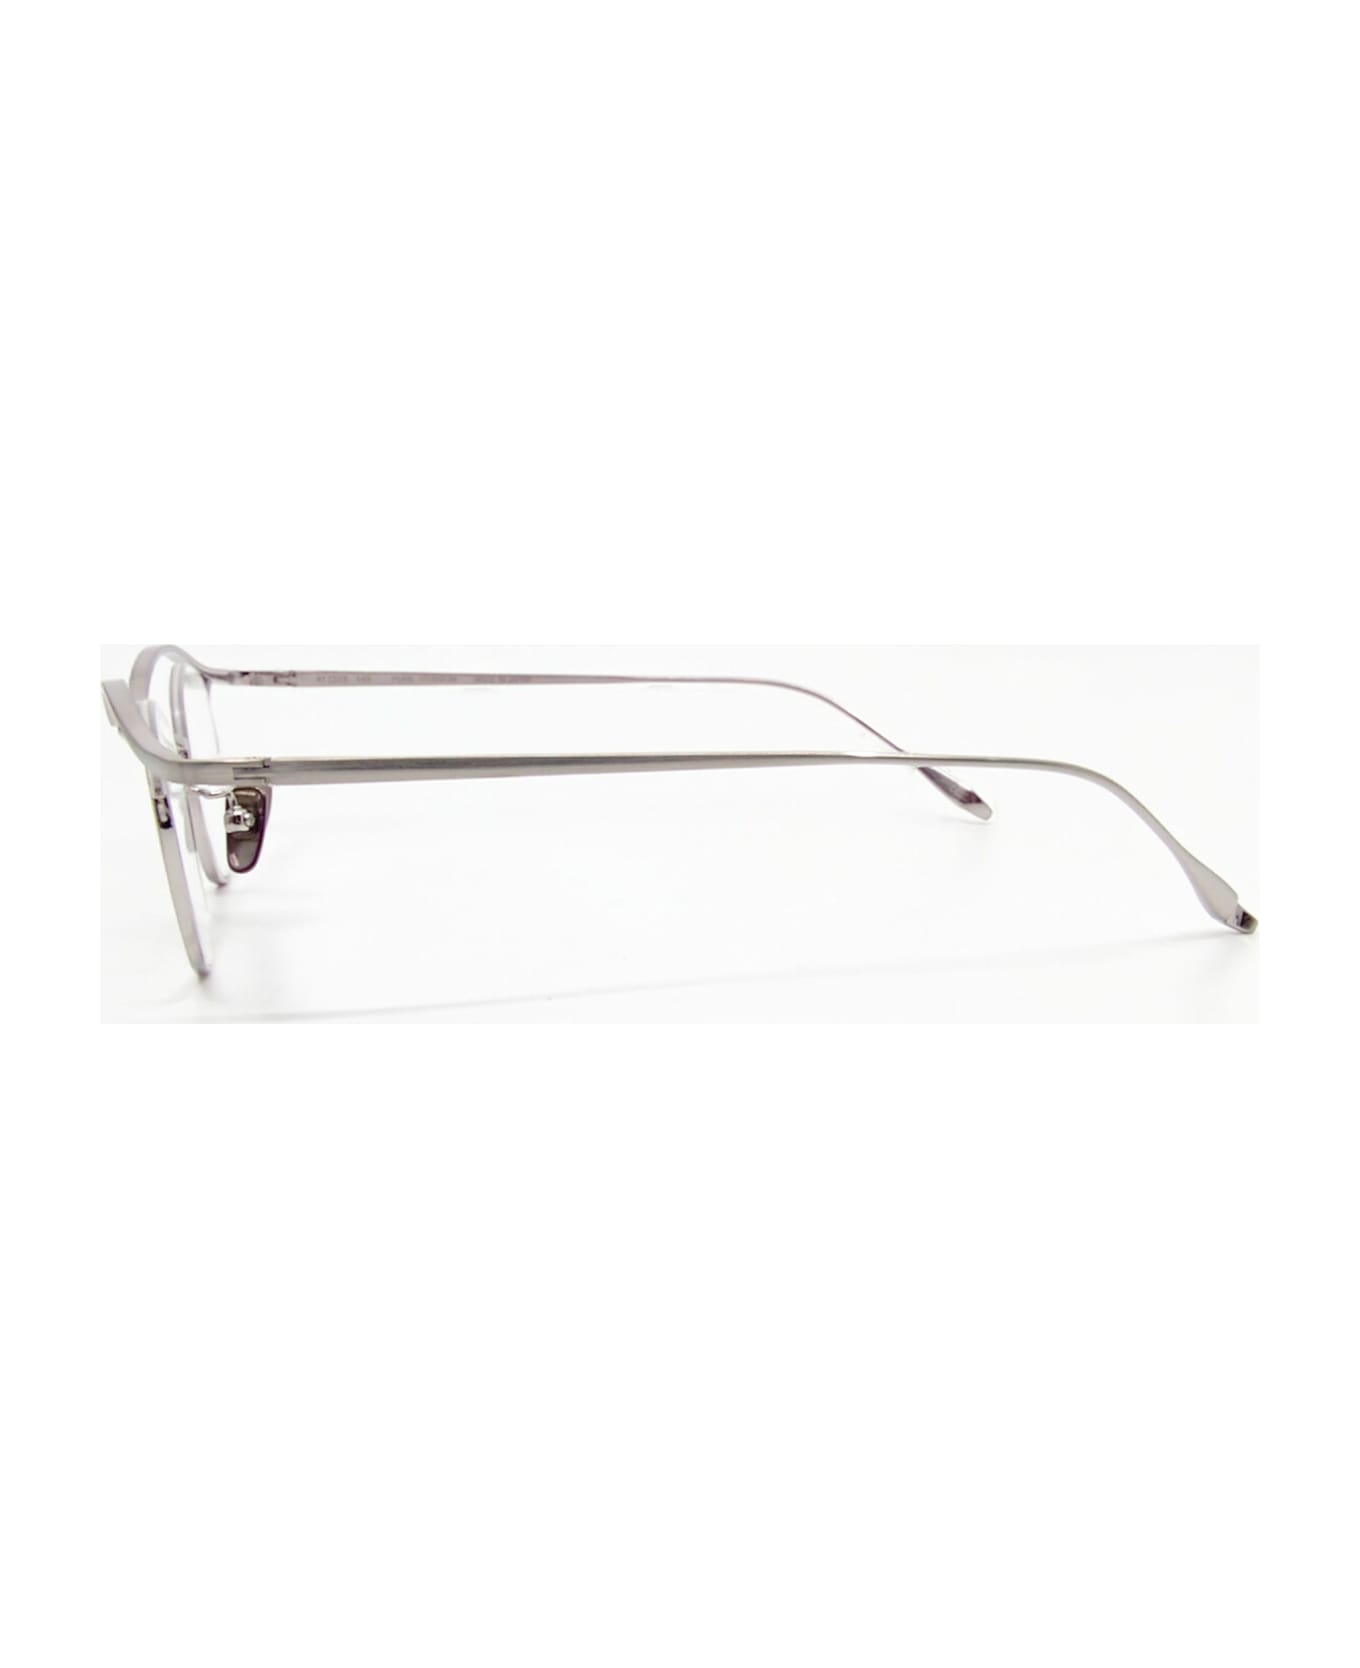 FACTORY900 Titanos X Factory900 Mf-002 - Silver Rx Glasses - Silver